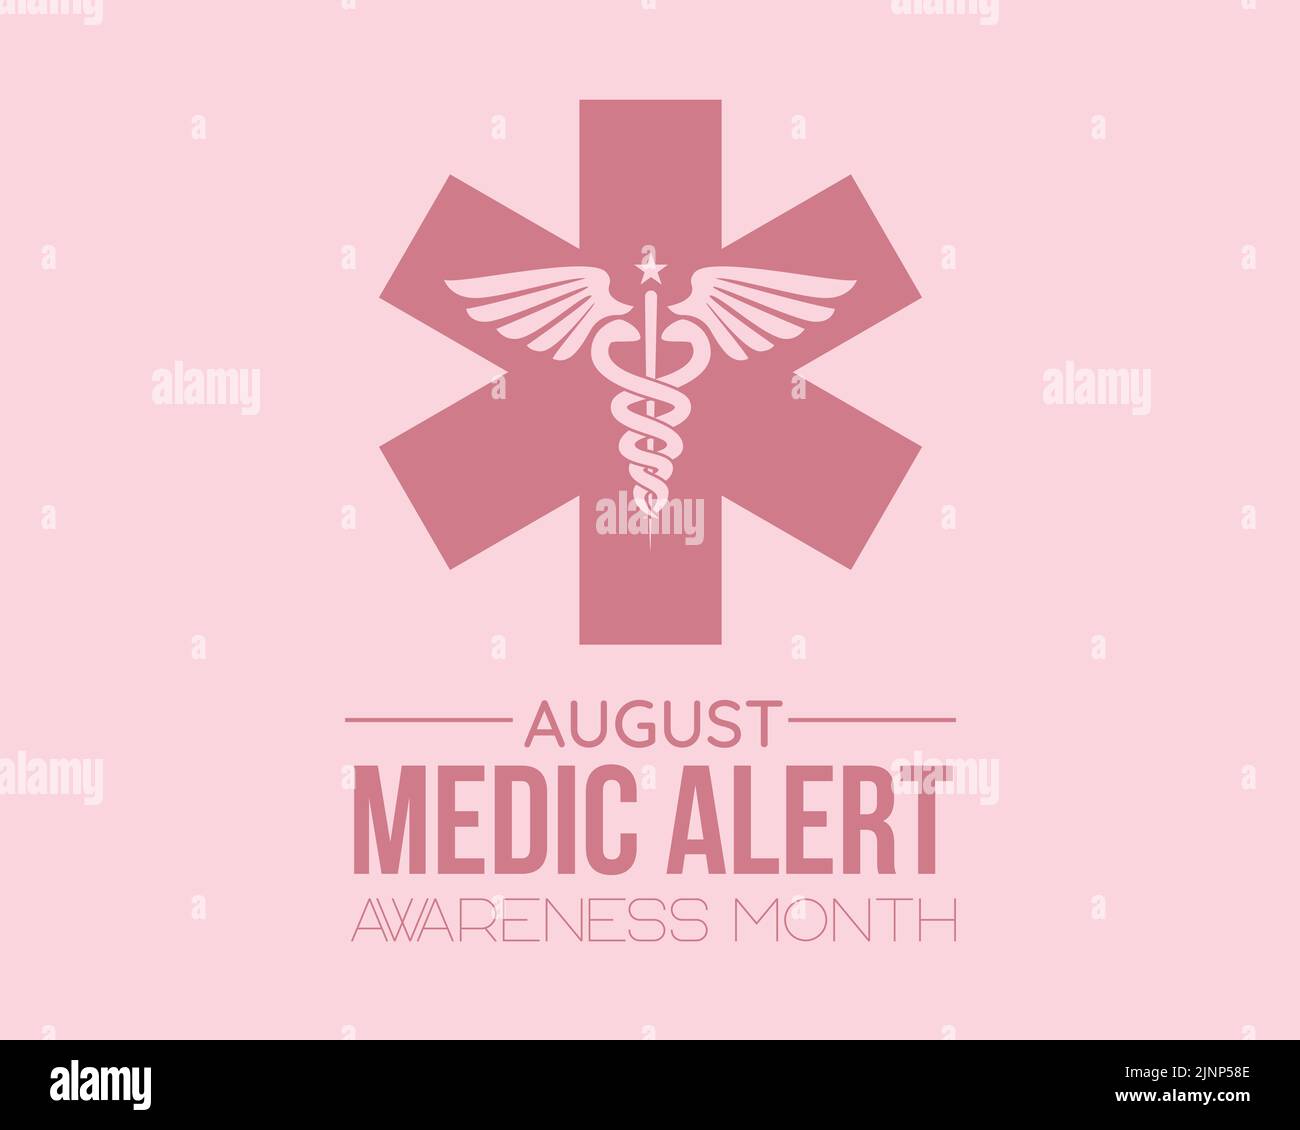 Medic Alert awareness month calligraphic banner design on pink background. Script lettering banner, poster, card concept idea. Health awareness vector Stock Vector